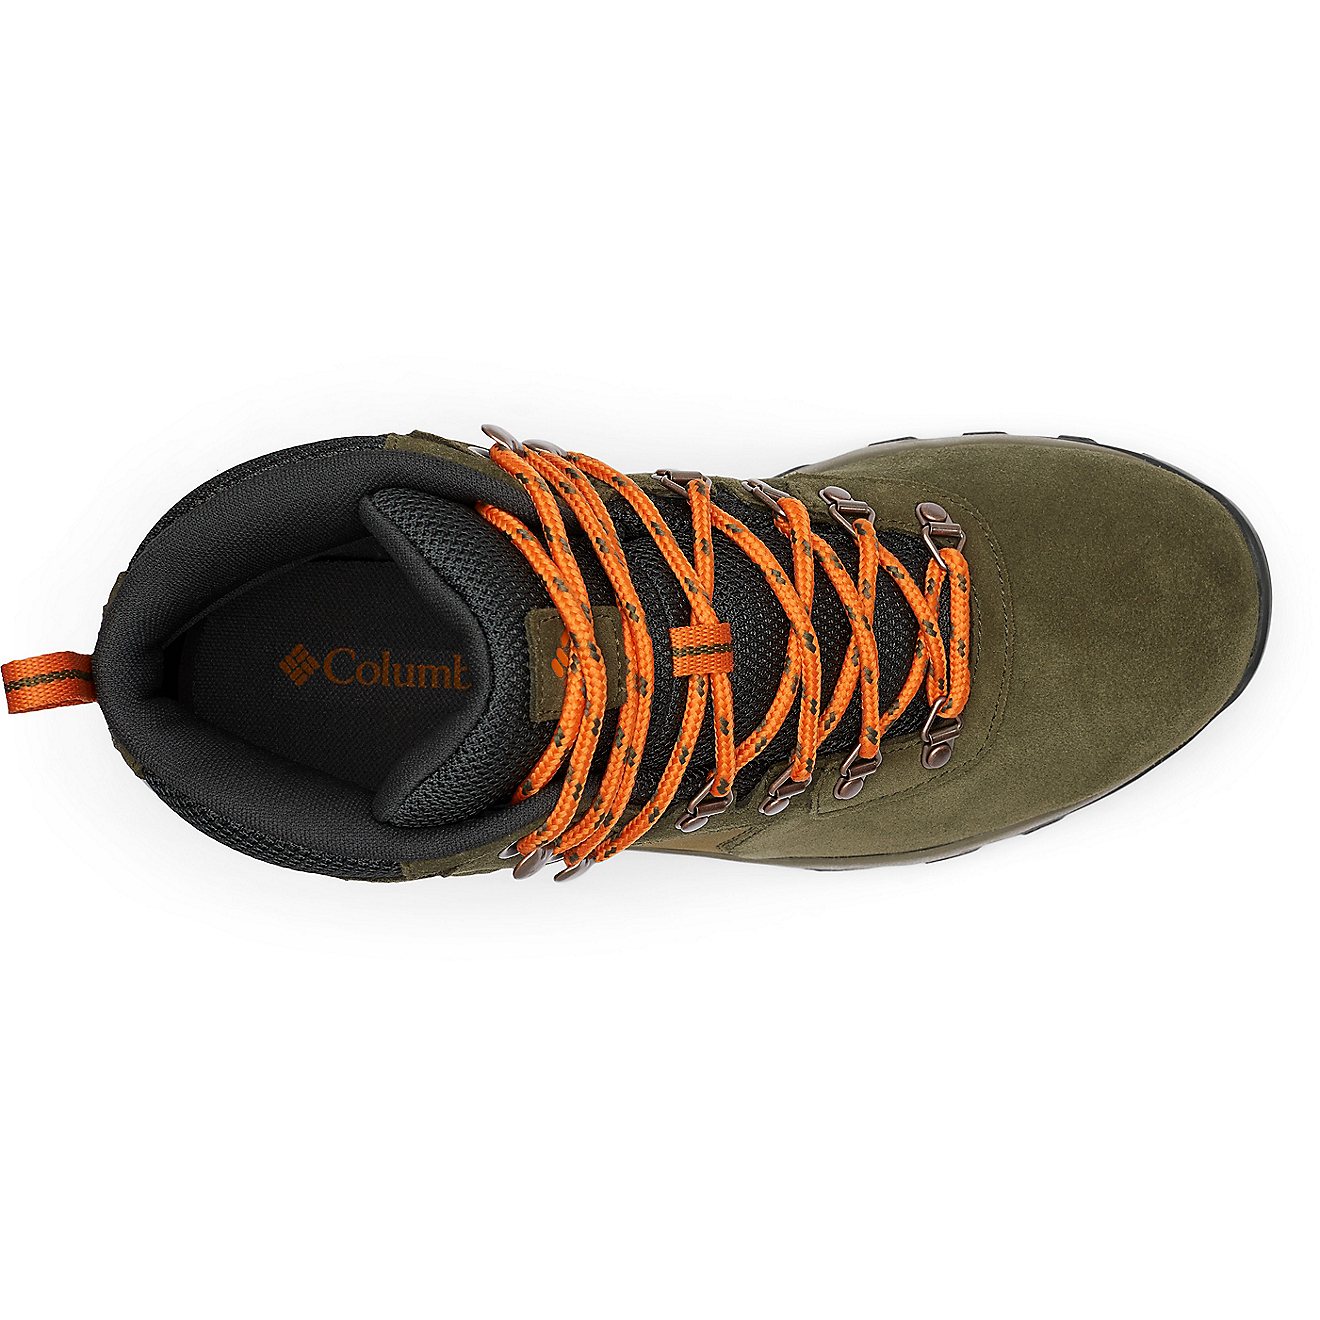 Columbia Sportswear Men's Newton Ridge Plus II Hiking Boots                                                                      - view number 6